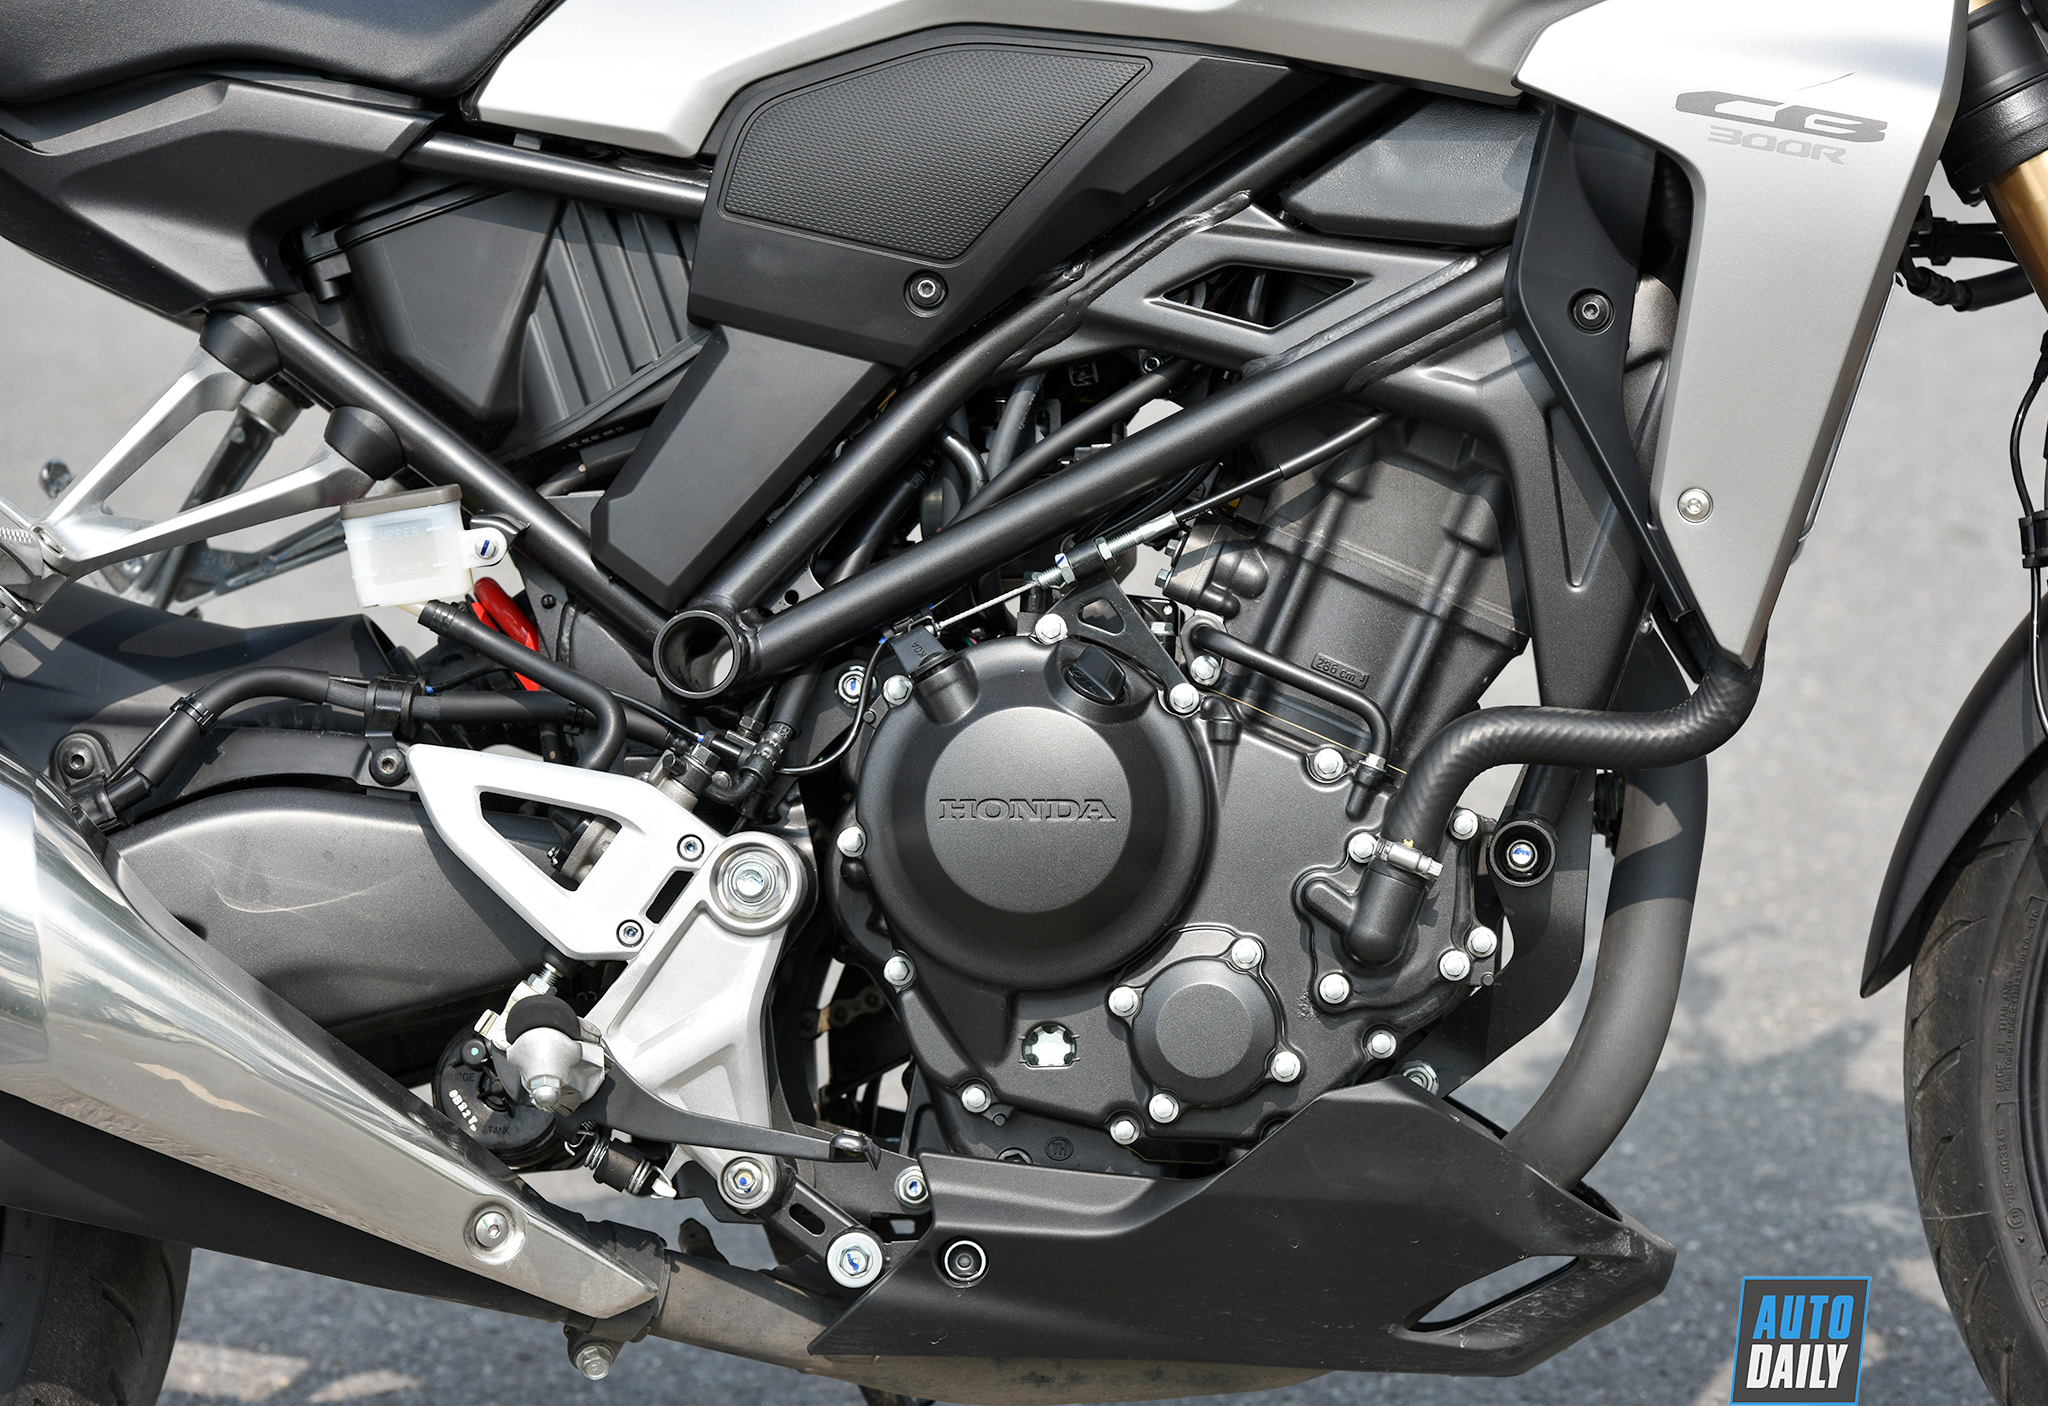 Honda CB300R 2019 review: Beautiful design, reasonable price dsc-7704-copy.jpg